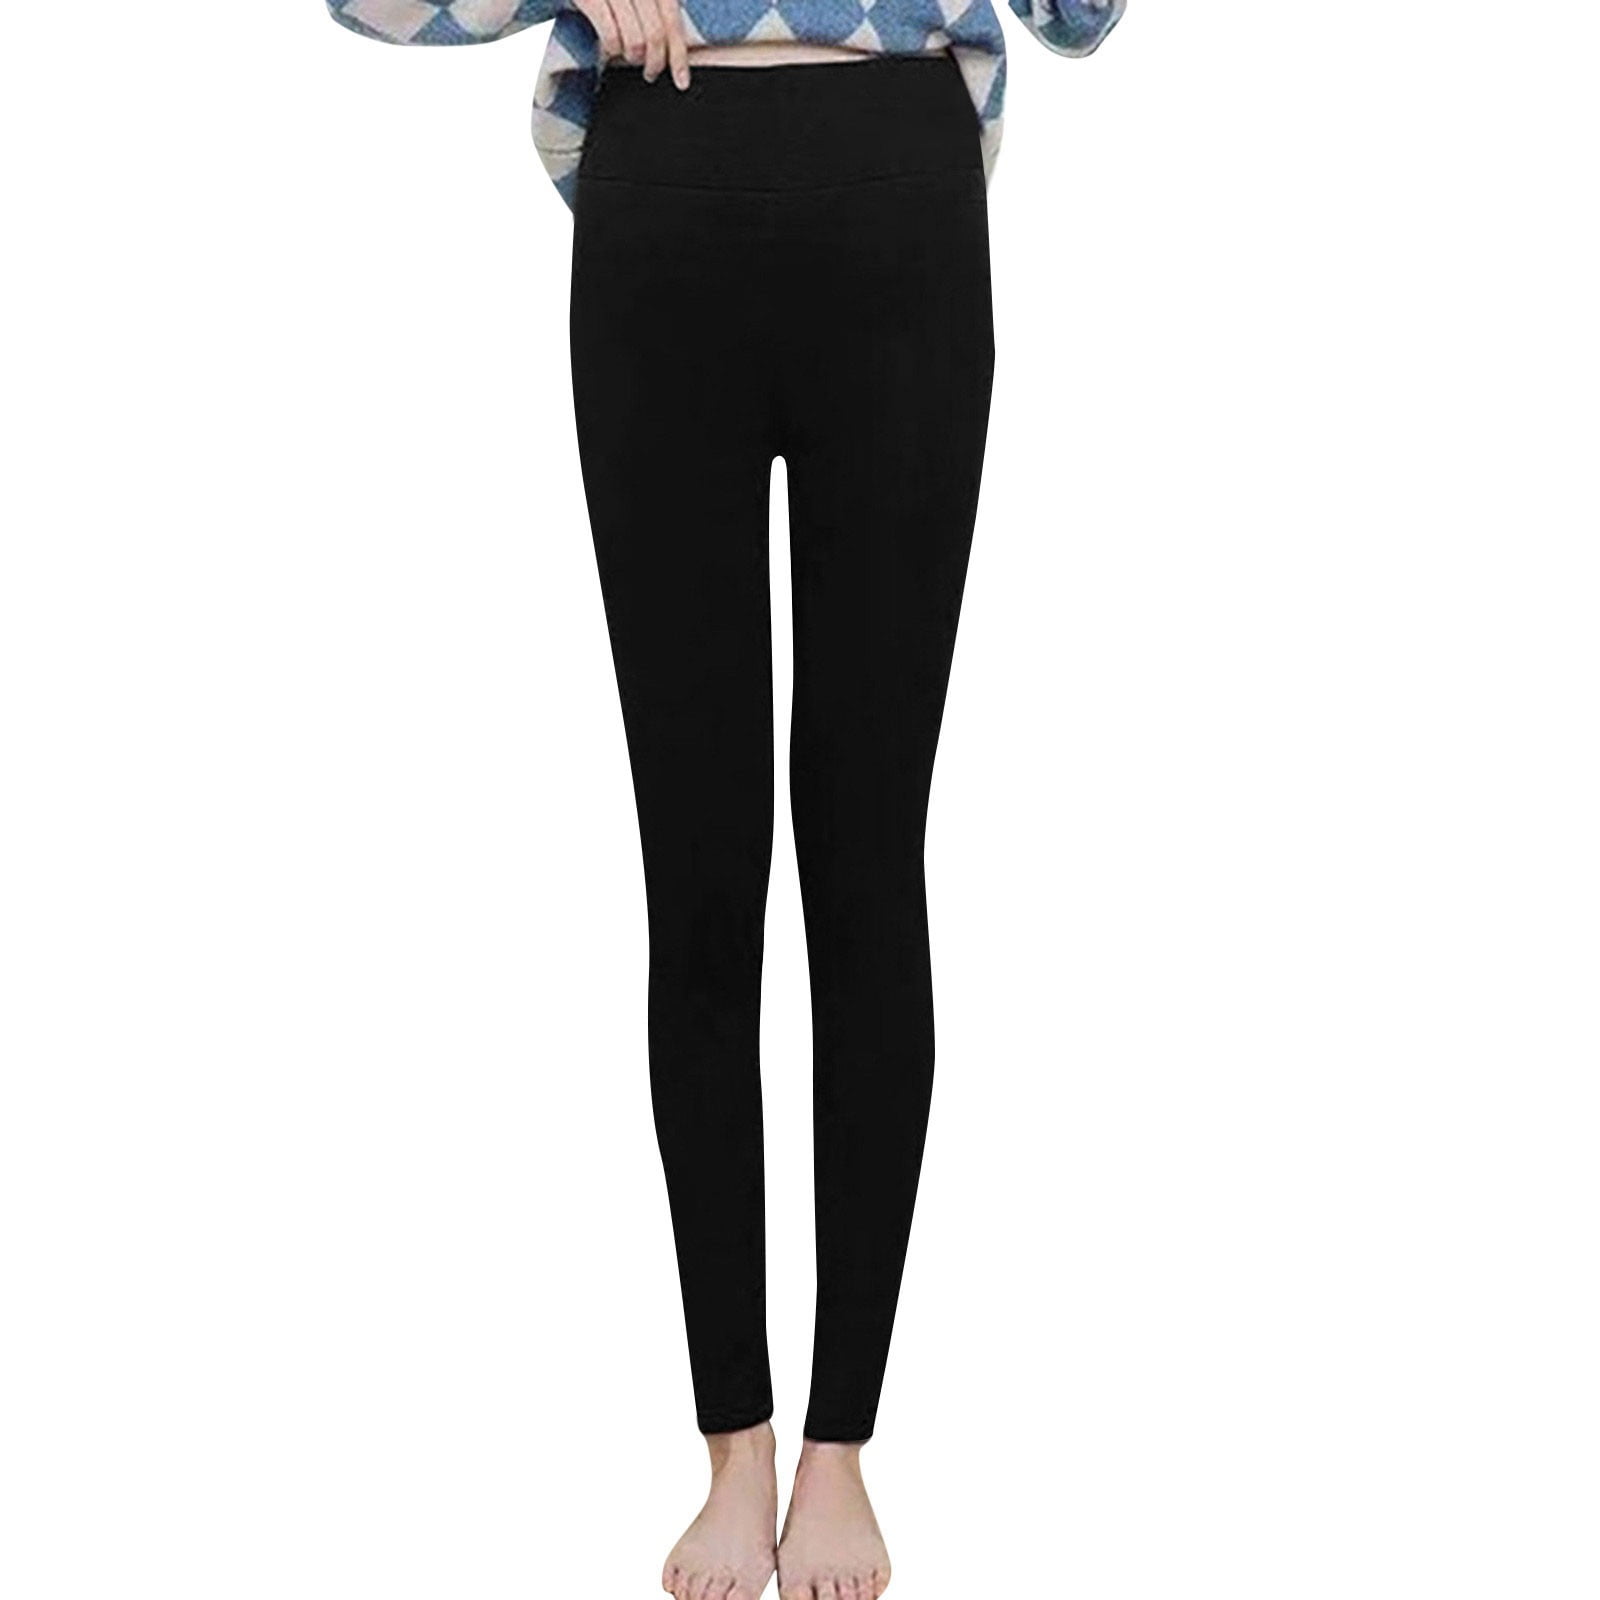 Cotton Thermal Leggings Female High Waist Thin Flexiable Fashion Solid  Tight Body Pants Plus Size Clothing Women теплые колготки